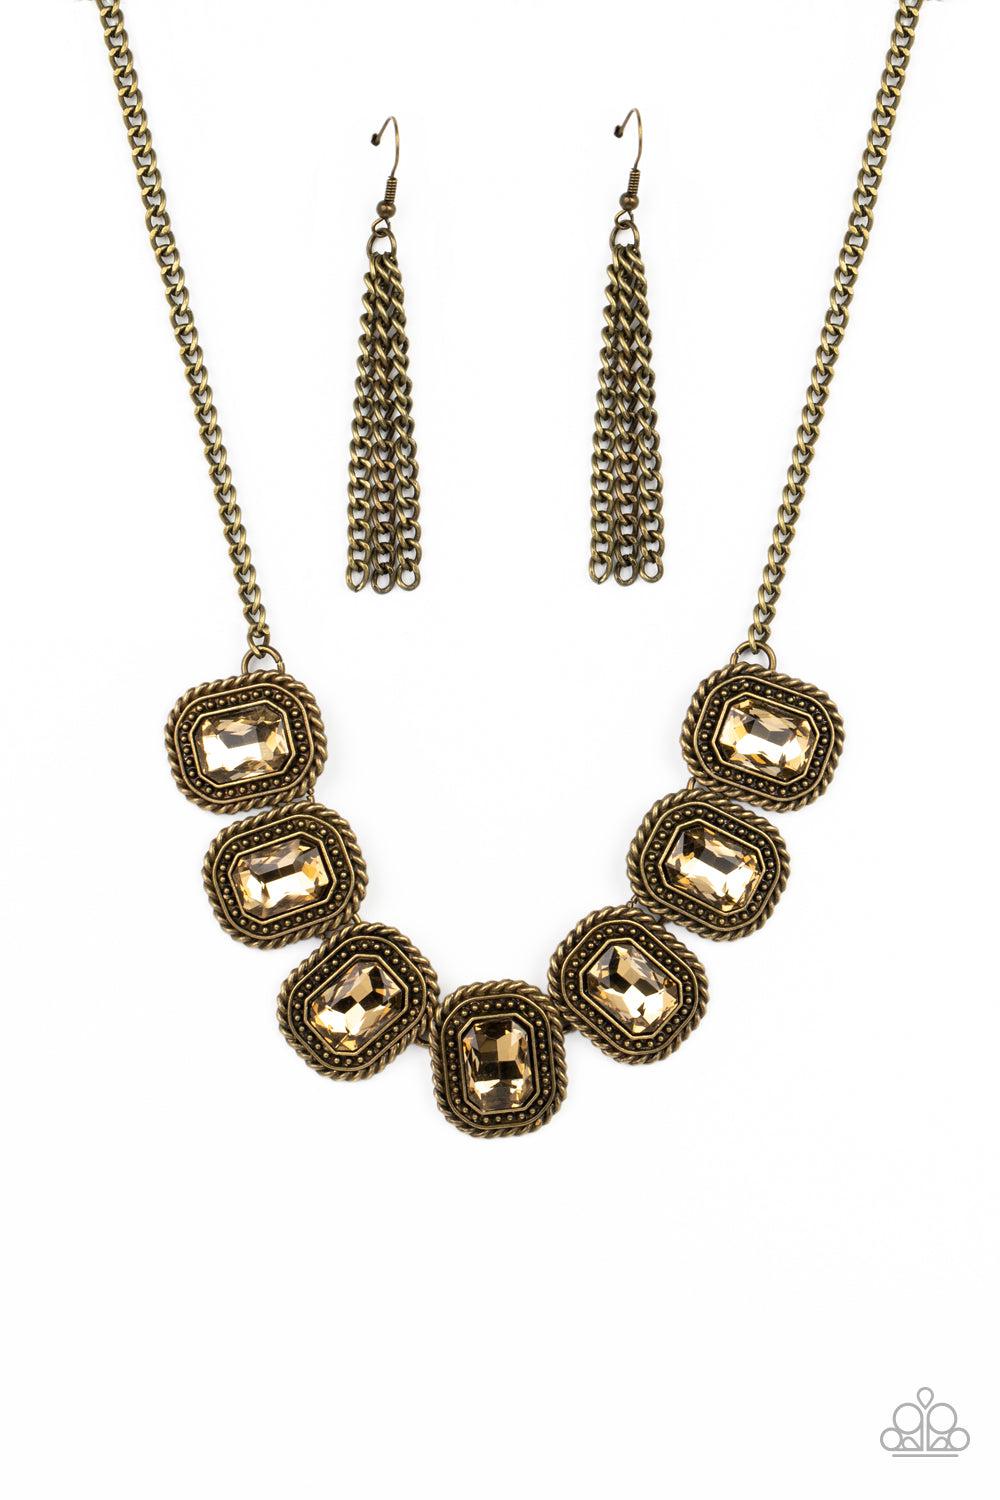 Iced Iron Brass Rhinestone Necklace - Paparazzi Accessories- lightbox - CarasShop.com - $5 Jewelry by Cara Jewels